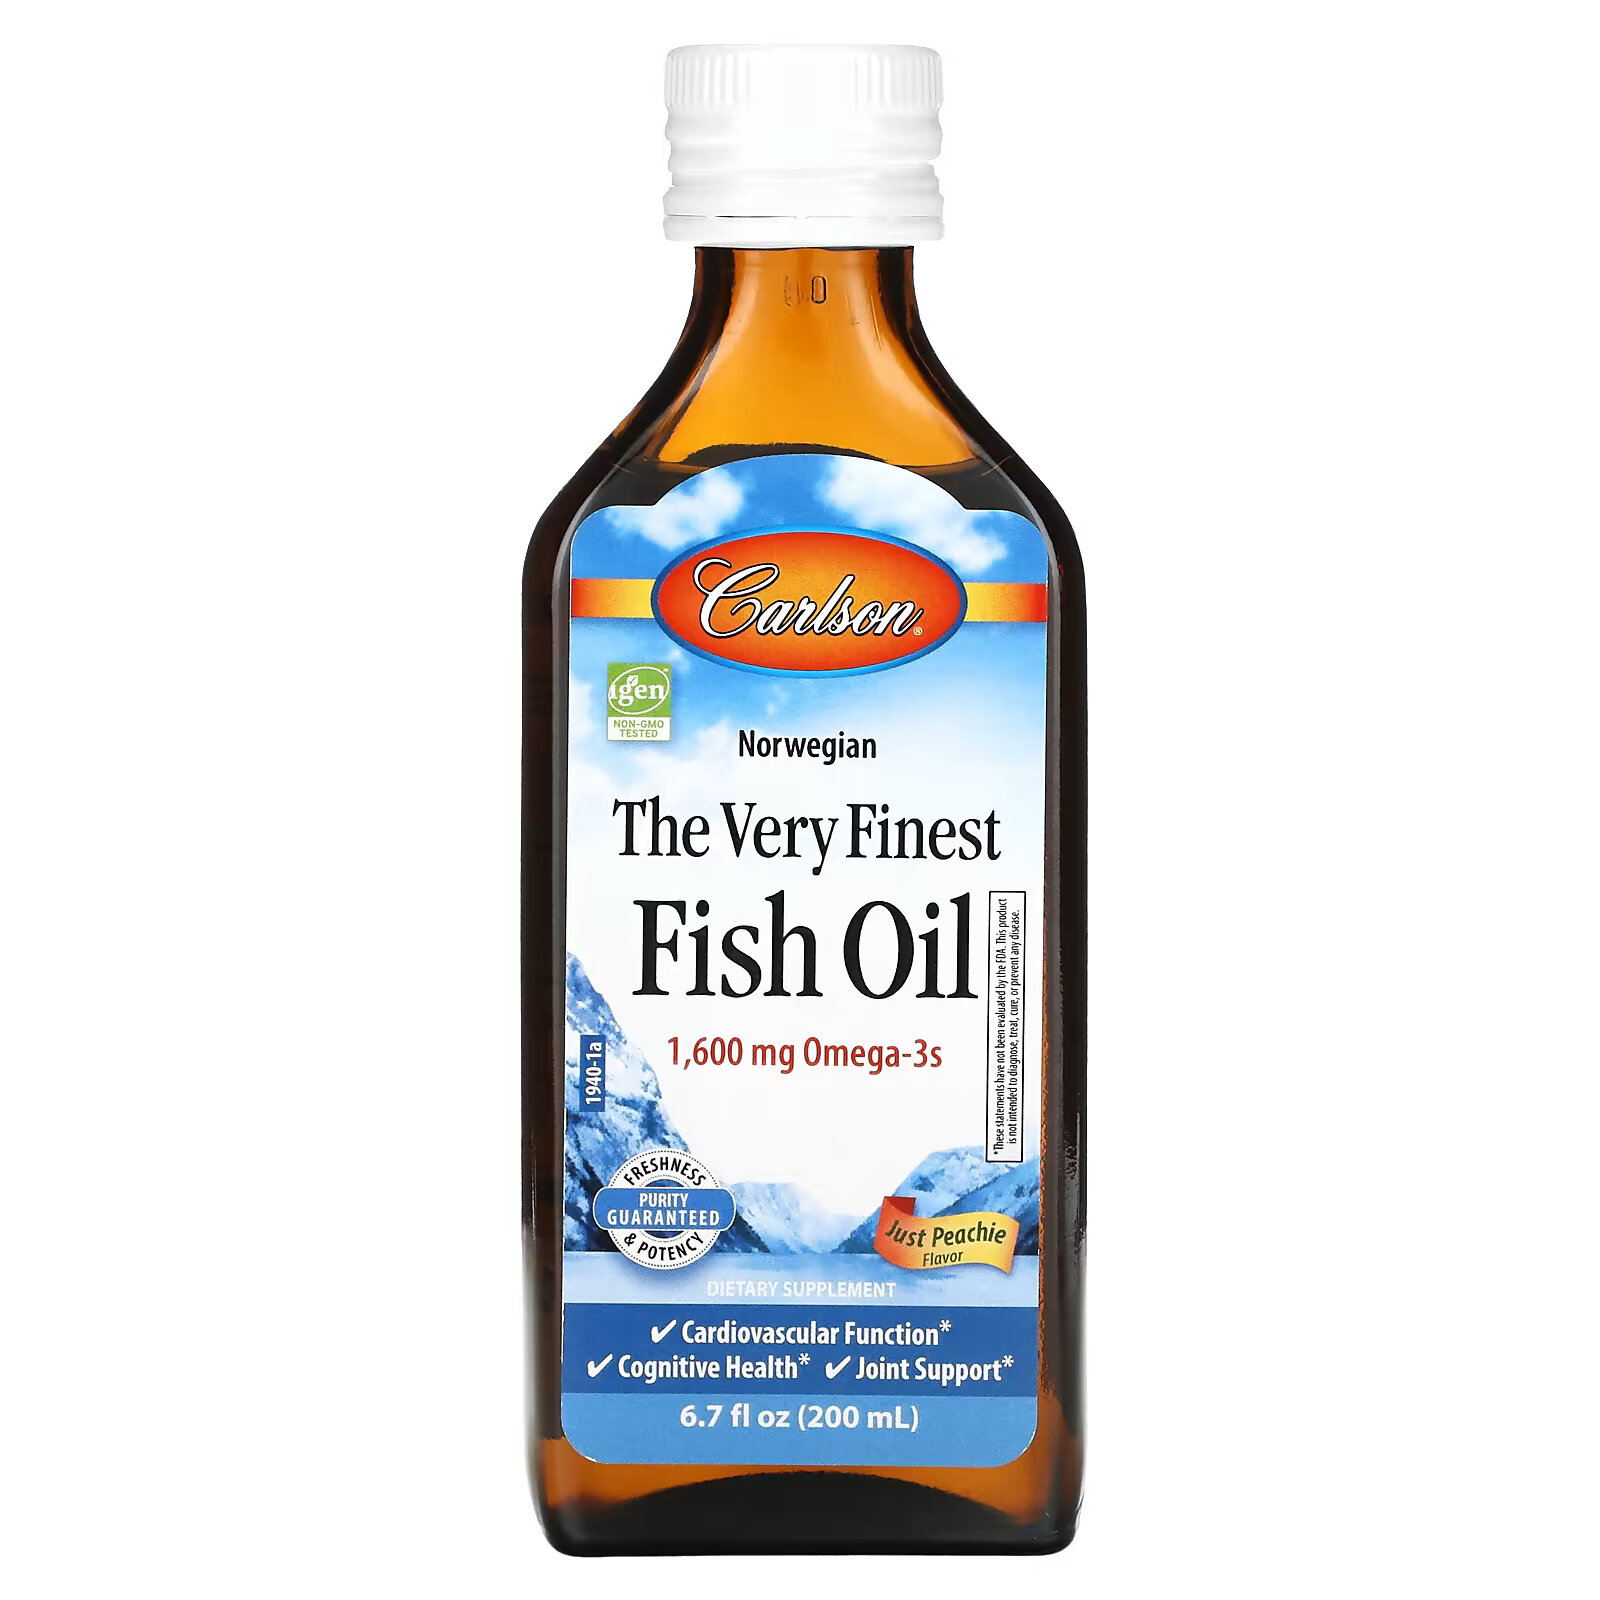 Carlson, The Very Finest Fish Oil, Just Peachie, 1,600 mg, 6.7 fl oz (200 ml) carlson kids norwegian the very finest fish oil just peachie 800 mg 6 7 fl oz 200 ml